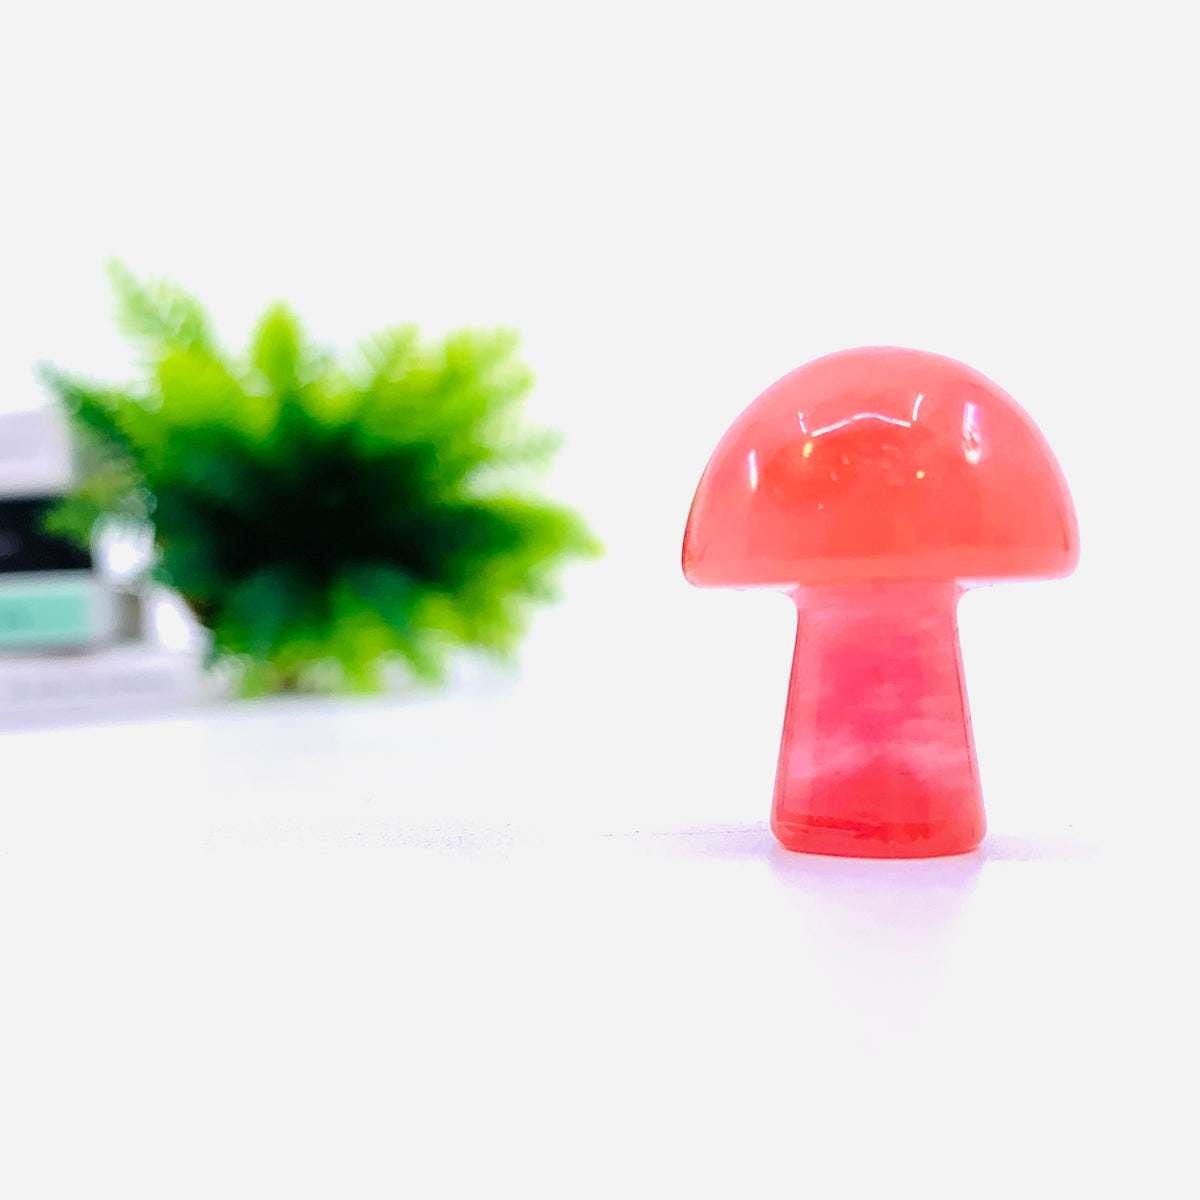 Mini Stone Mushrooms, Assorted 3 Pack